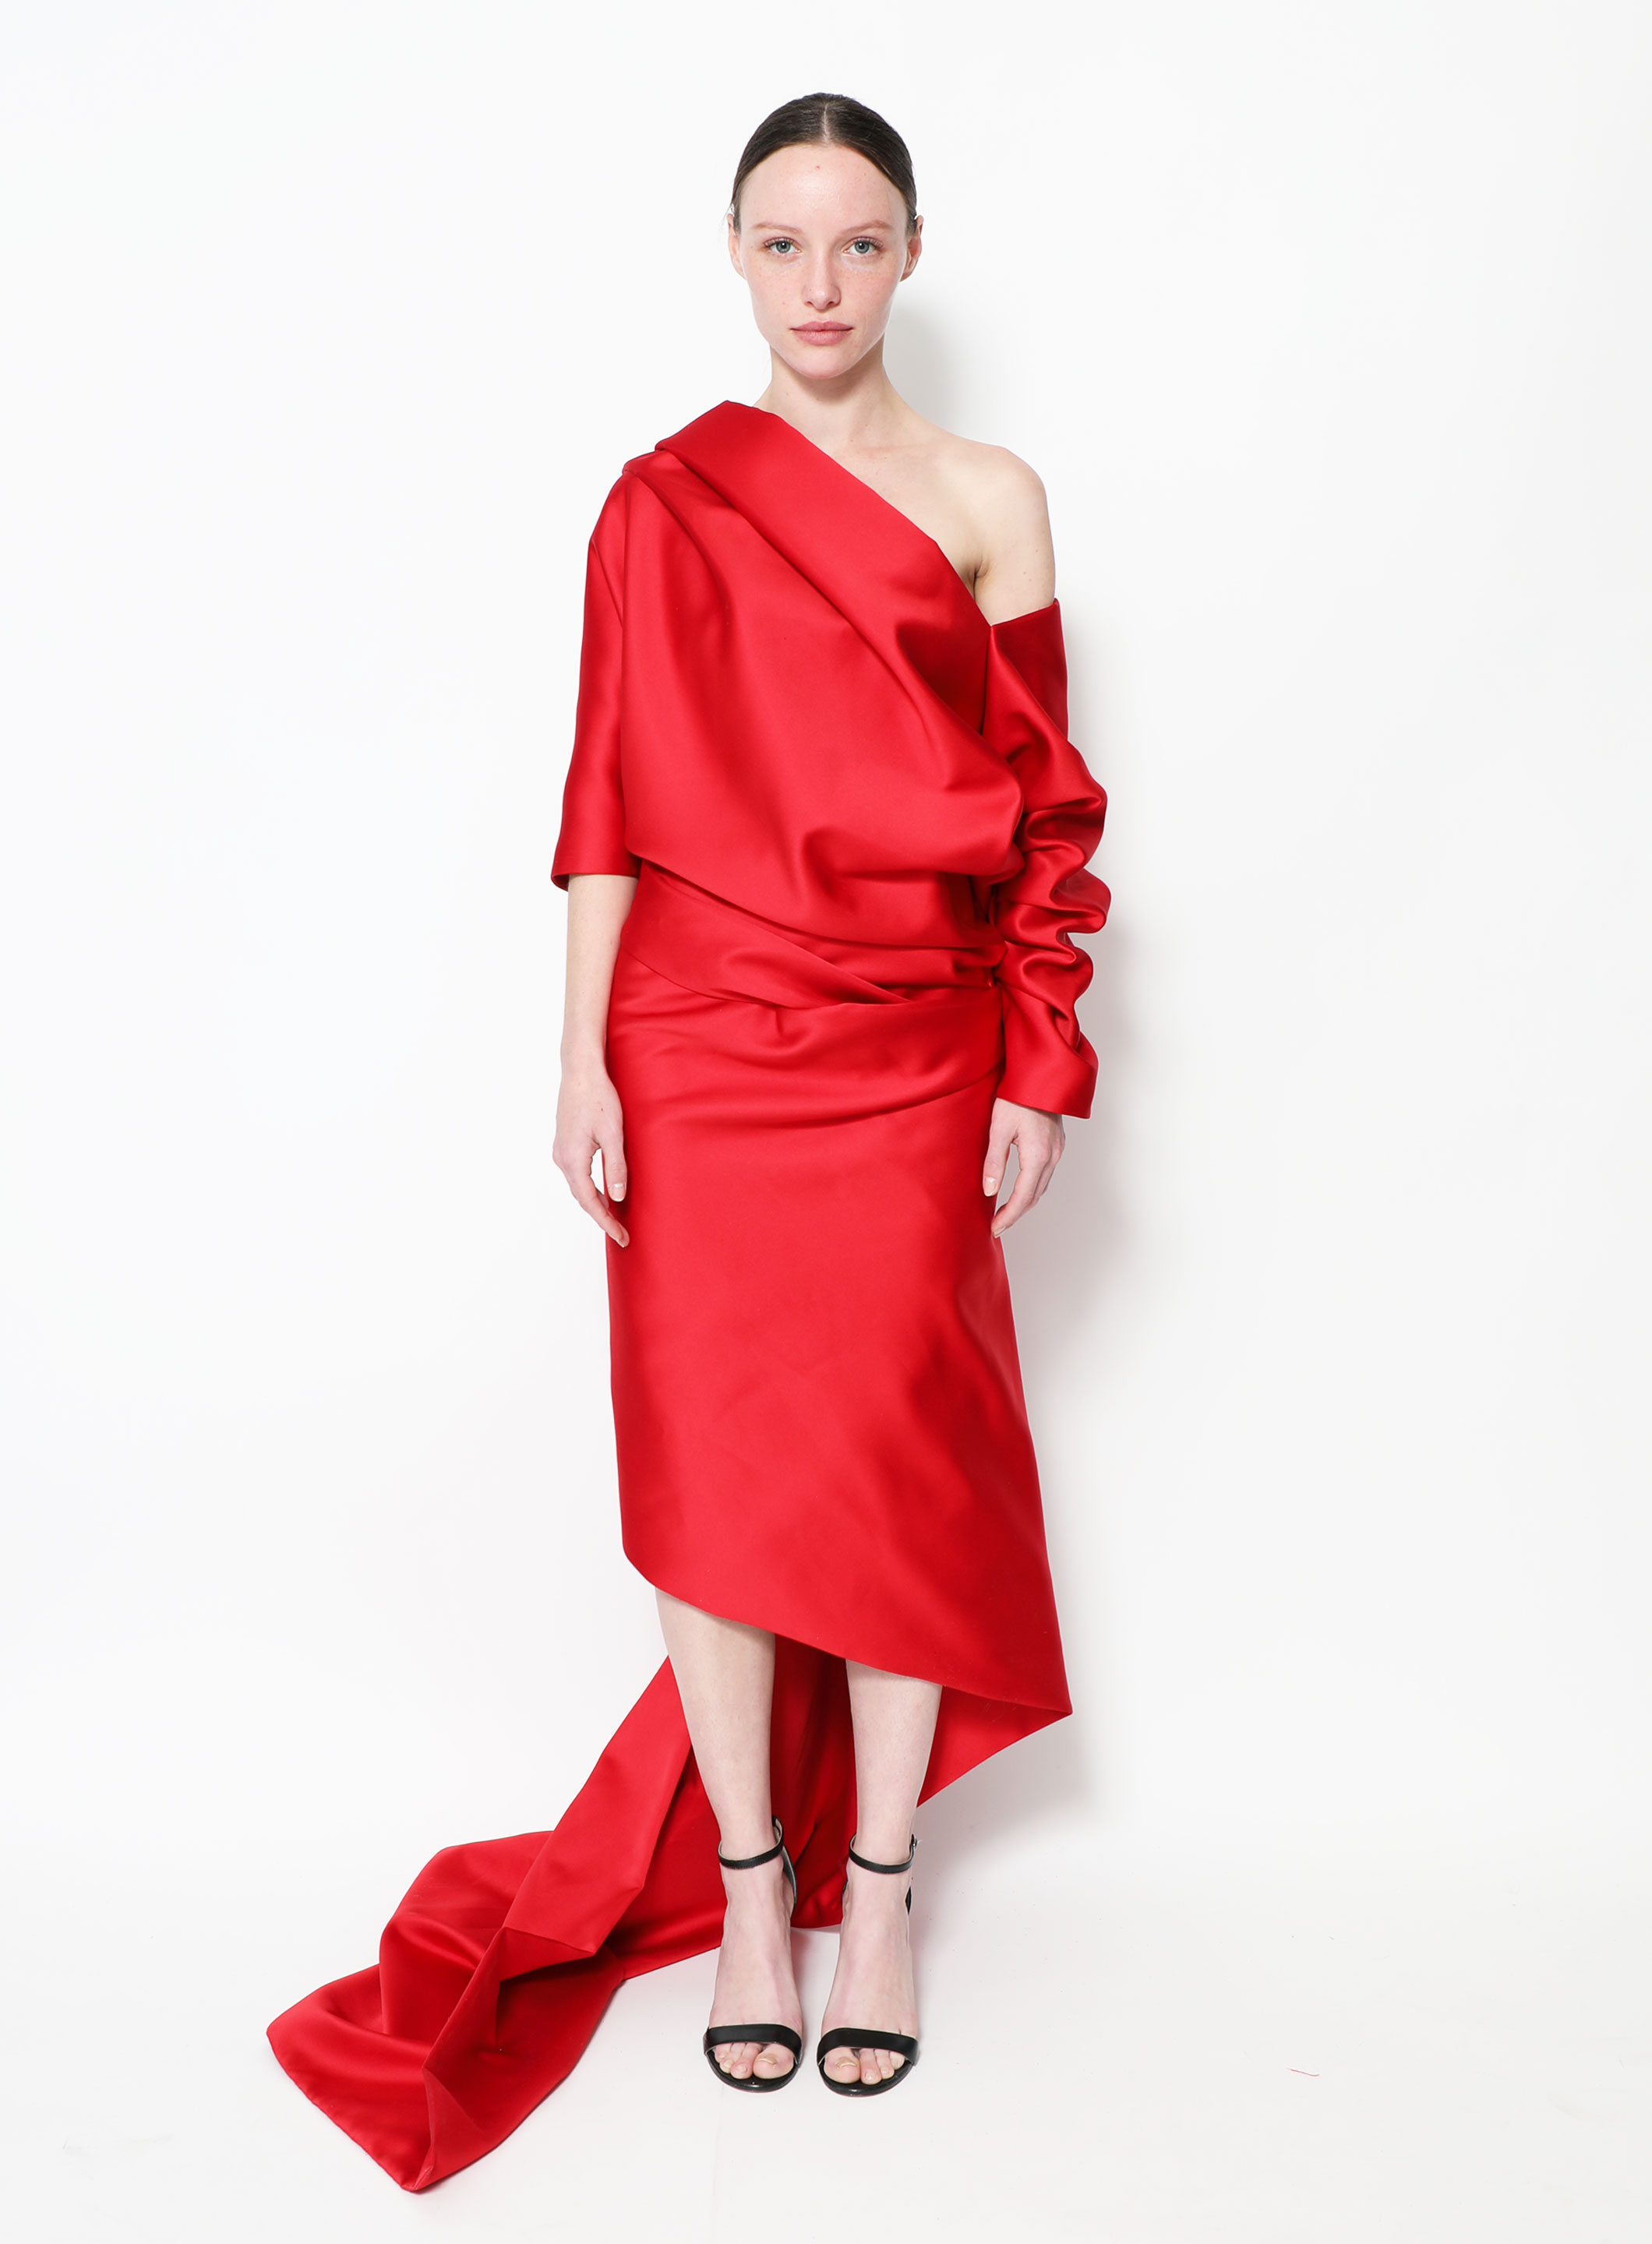 Red Asymmetric-hem draped crepe dress, Balenciaga